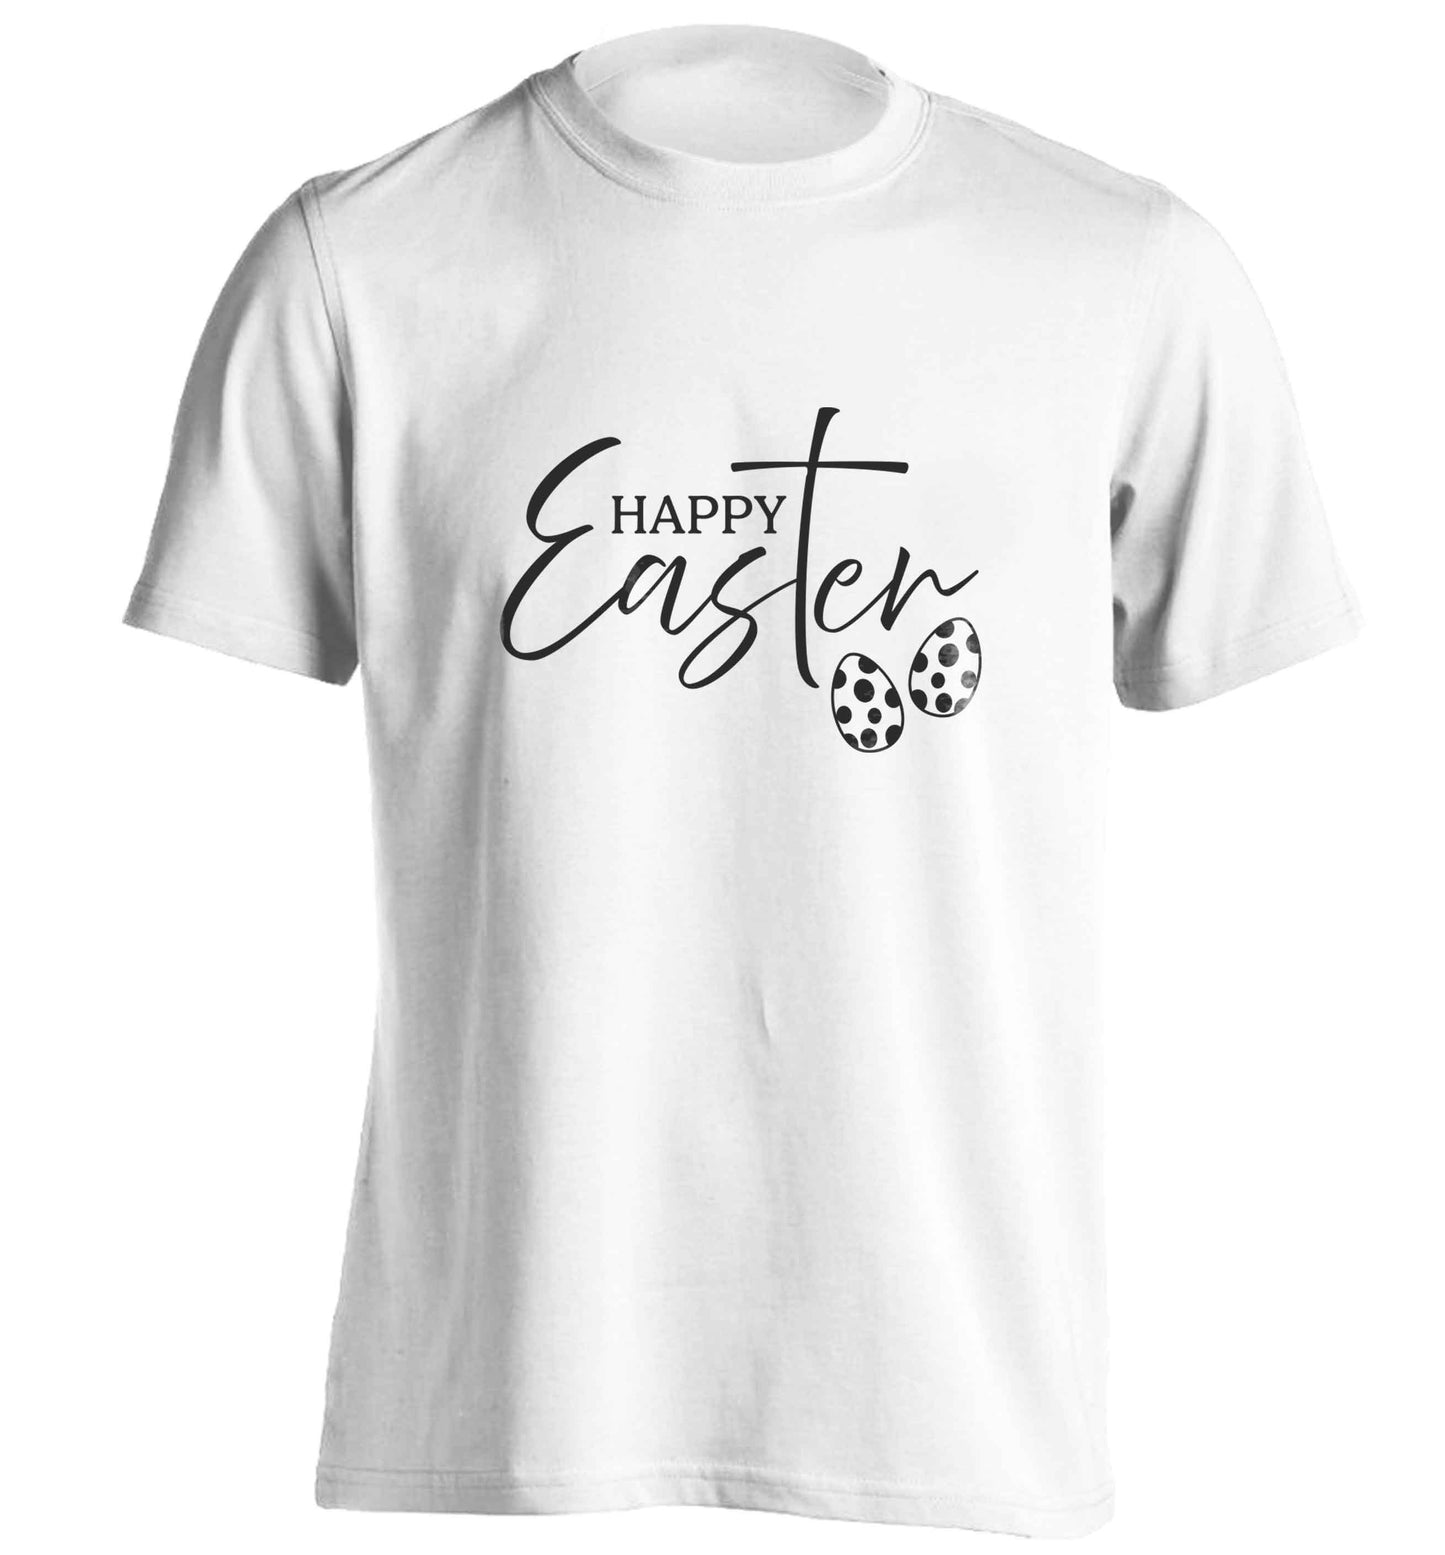 Happy Easter adults unisex white Tshirt 2XL